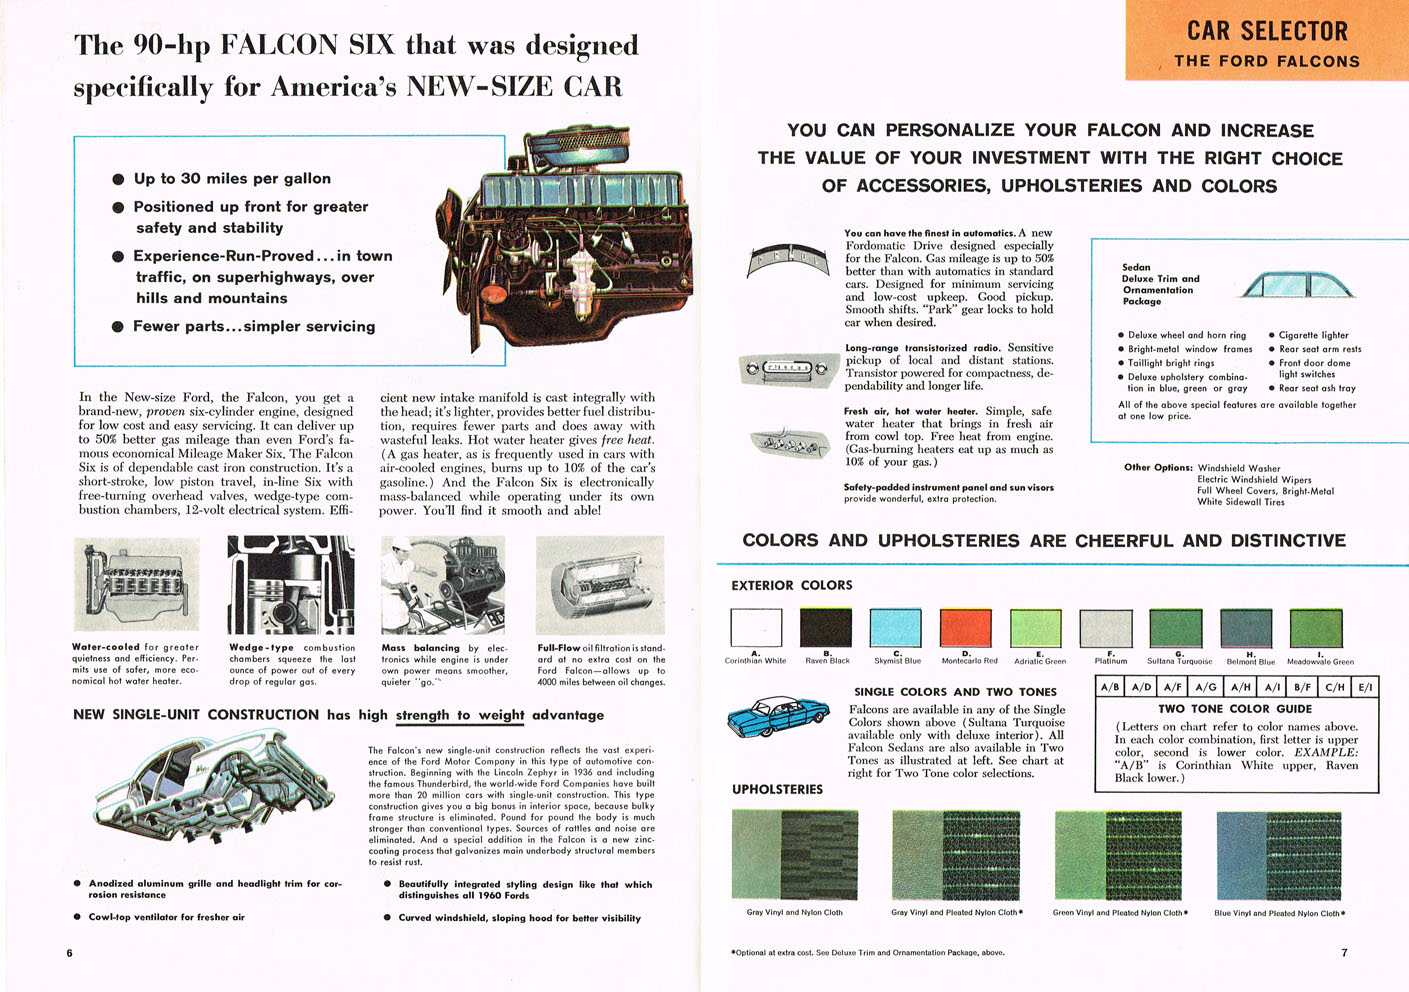 n_1960 Ford Falcon Booklet-06-07.jpg